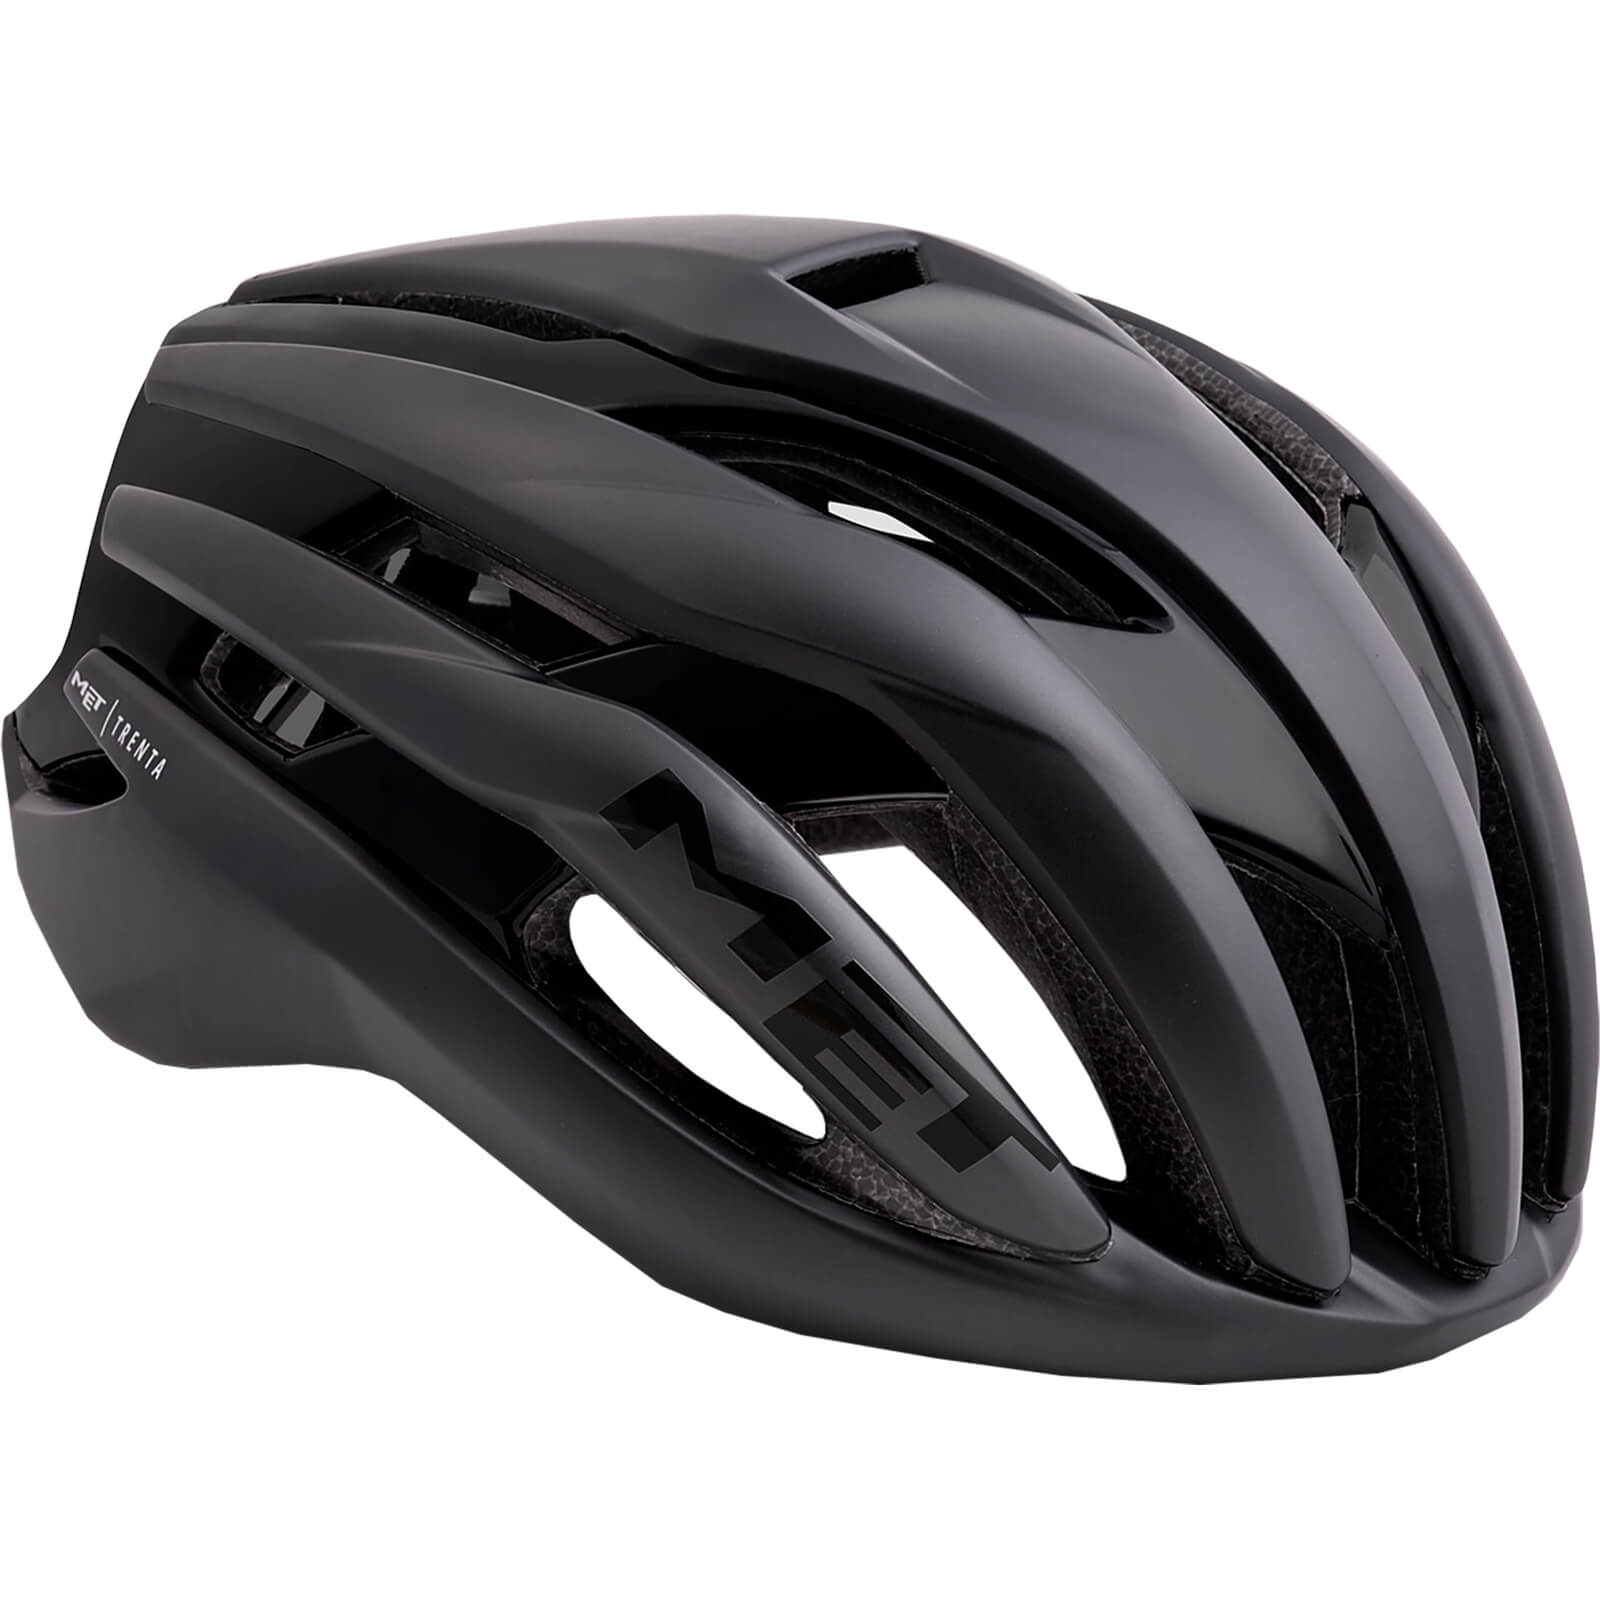 Image of MET Trenta Road Bike Helmet - Black / Matt Glossy / Large / 58cm / 62cm